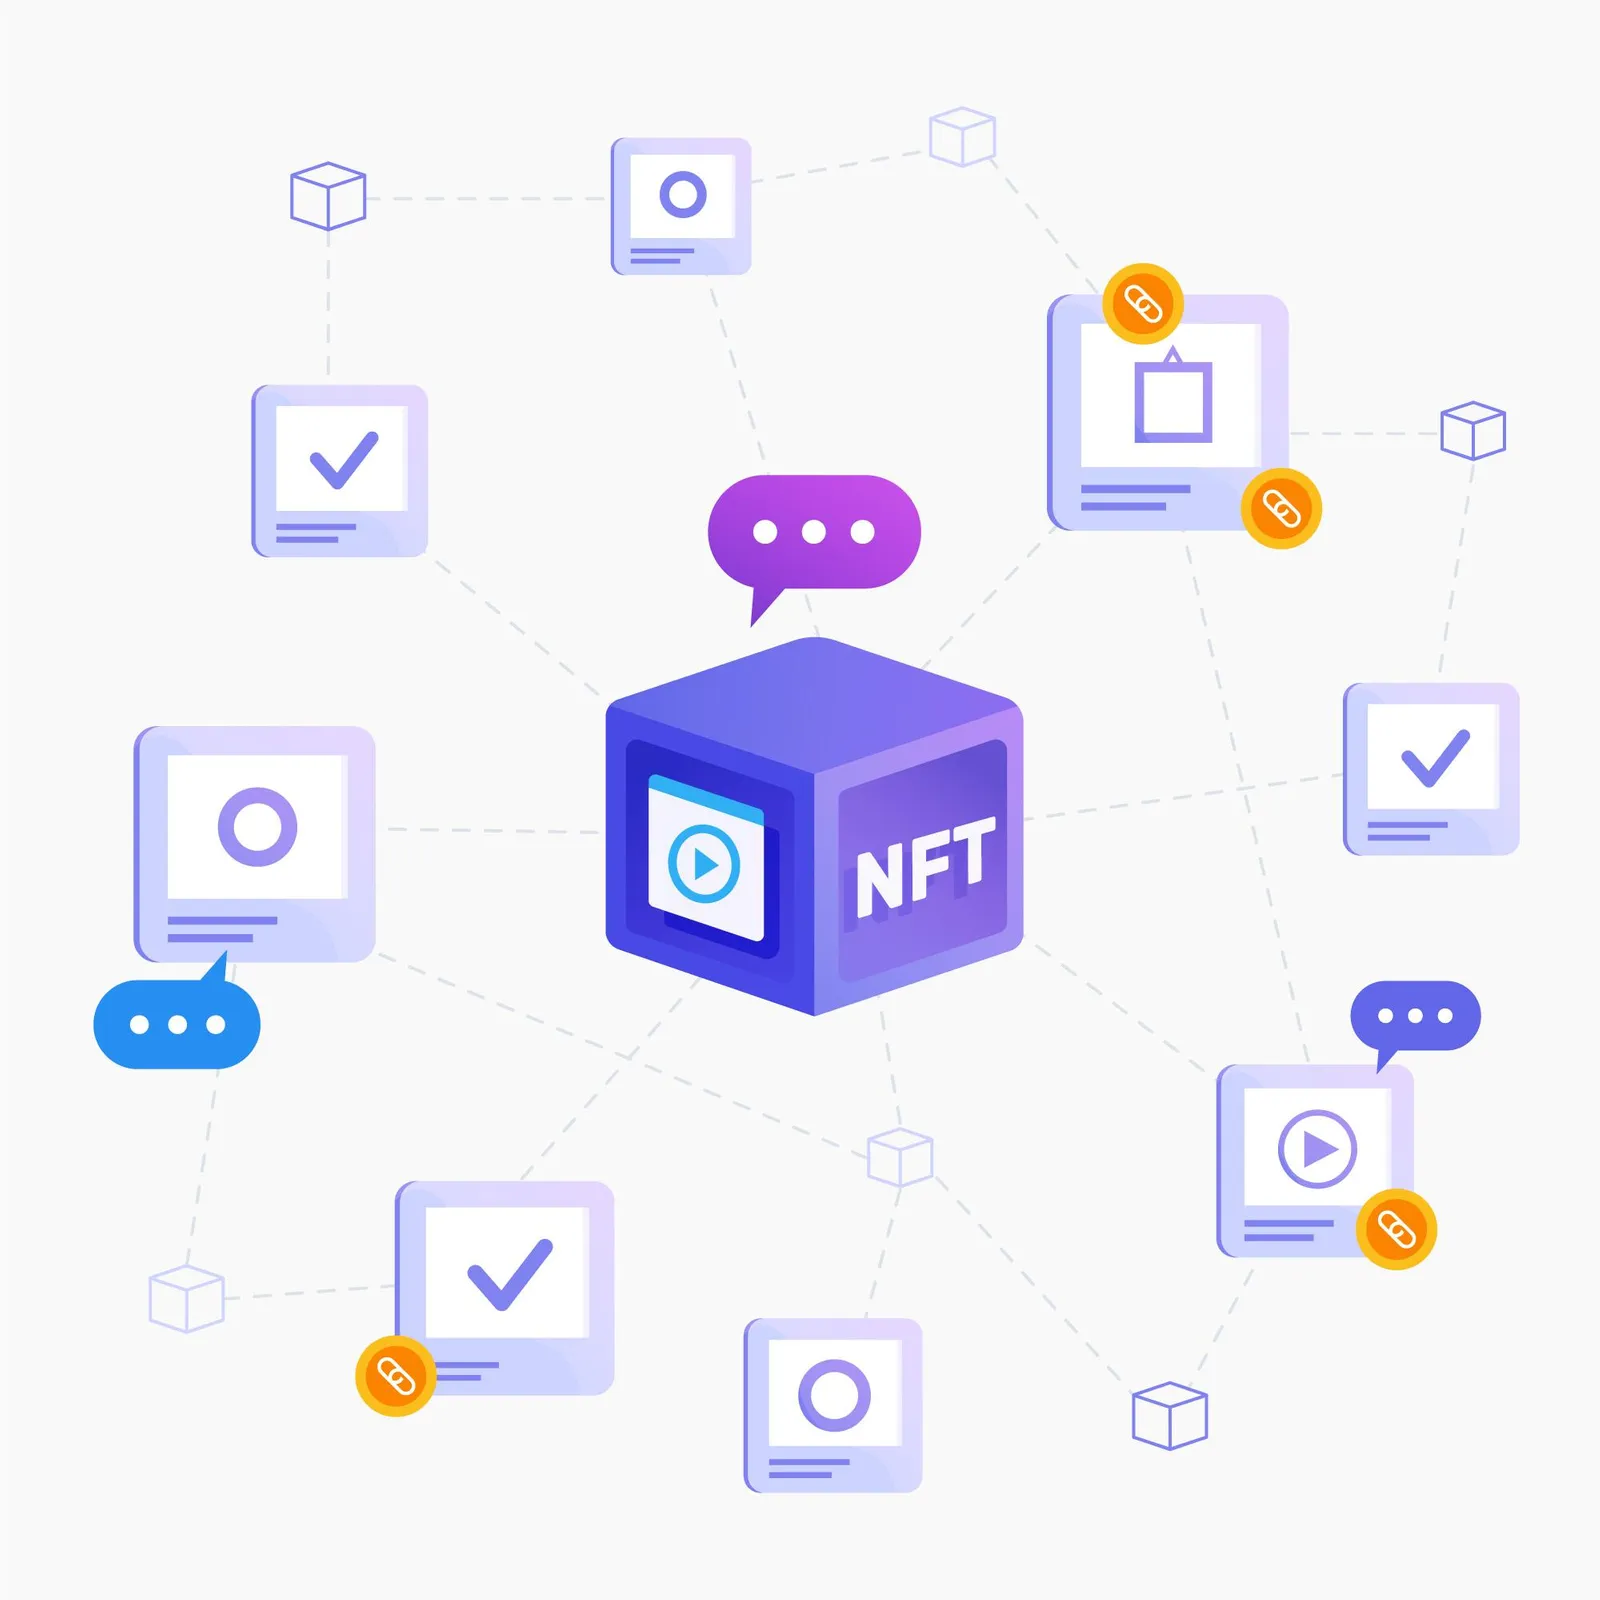 Get the customized NFT Marketplace platform